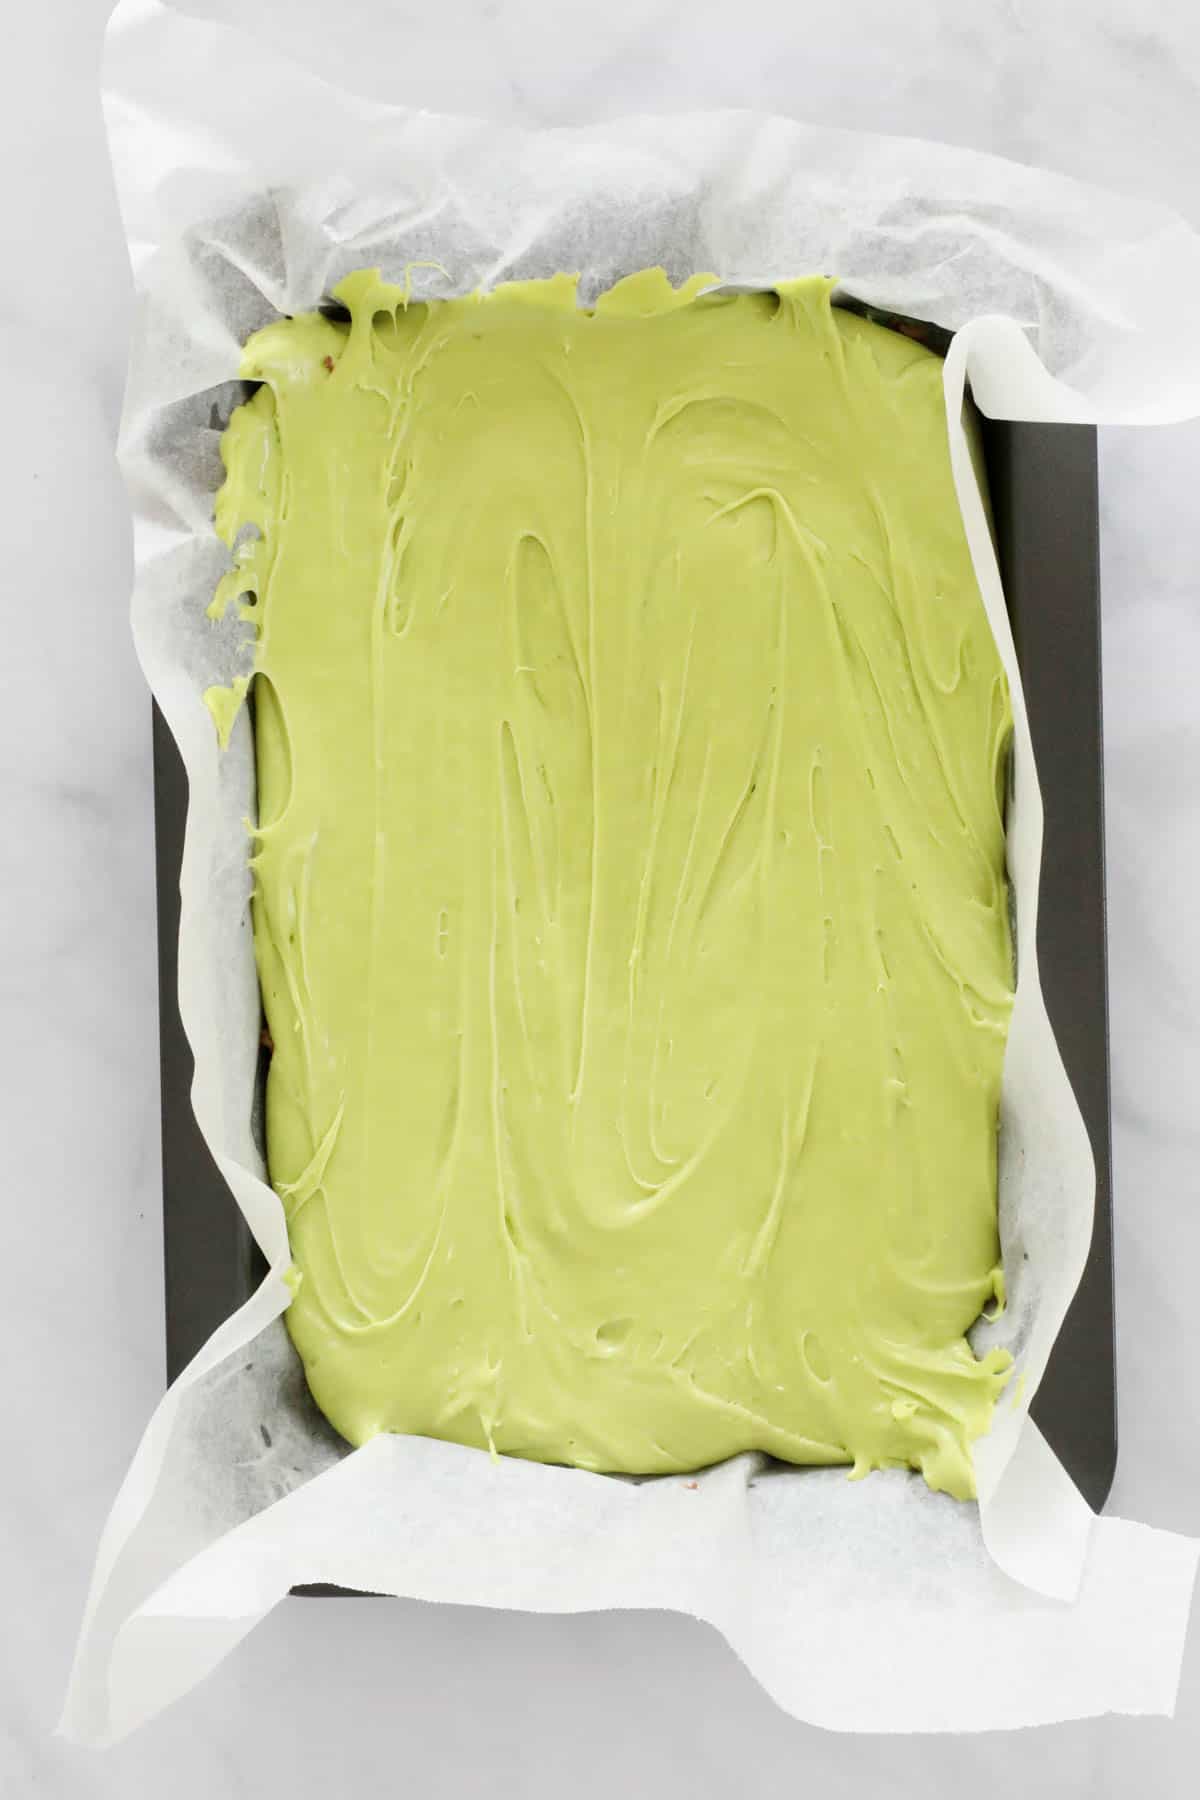 Green mint fudge in a baking tray.